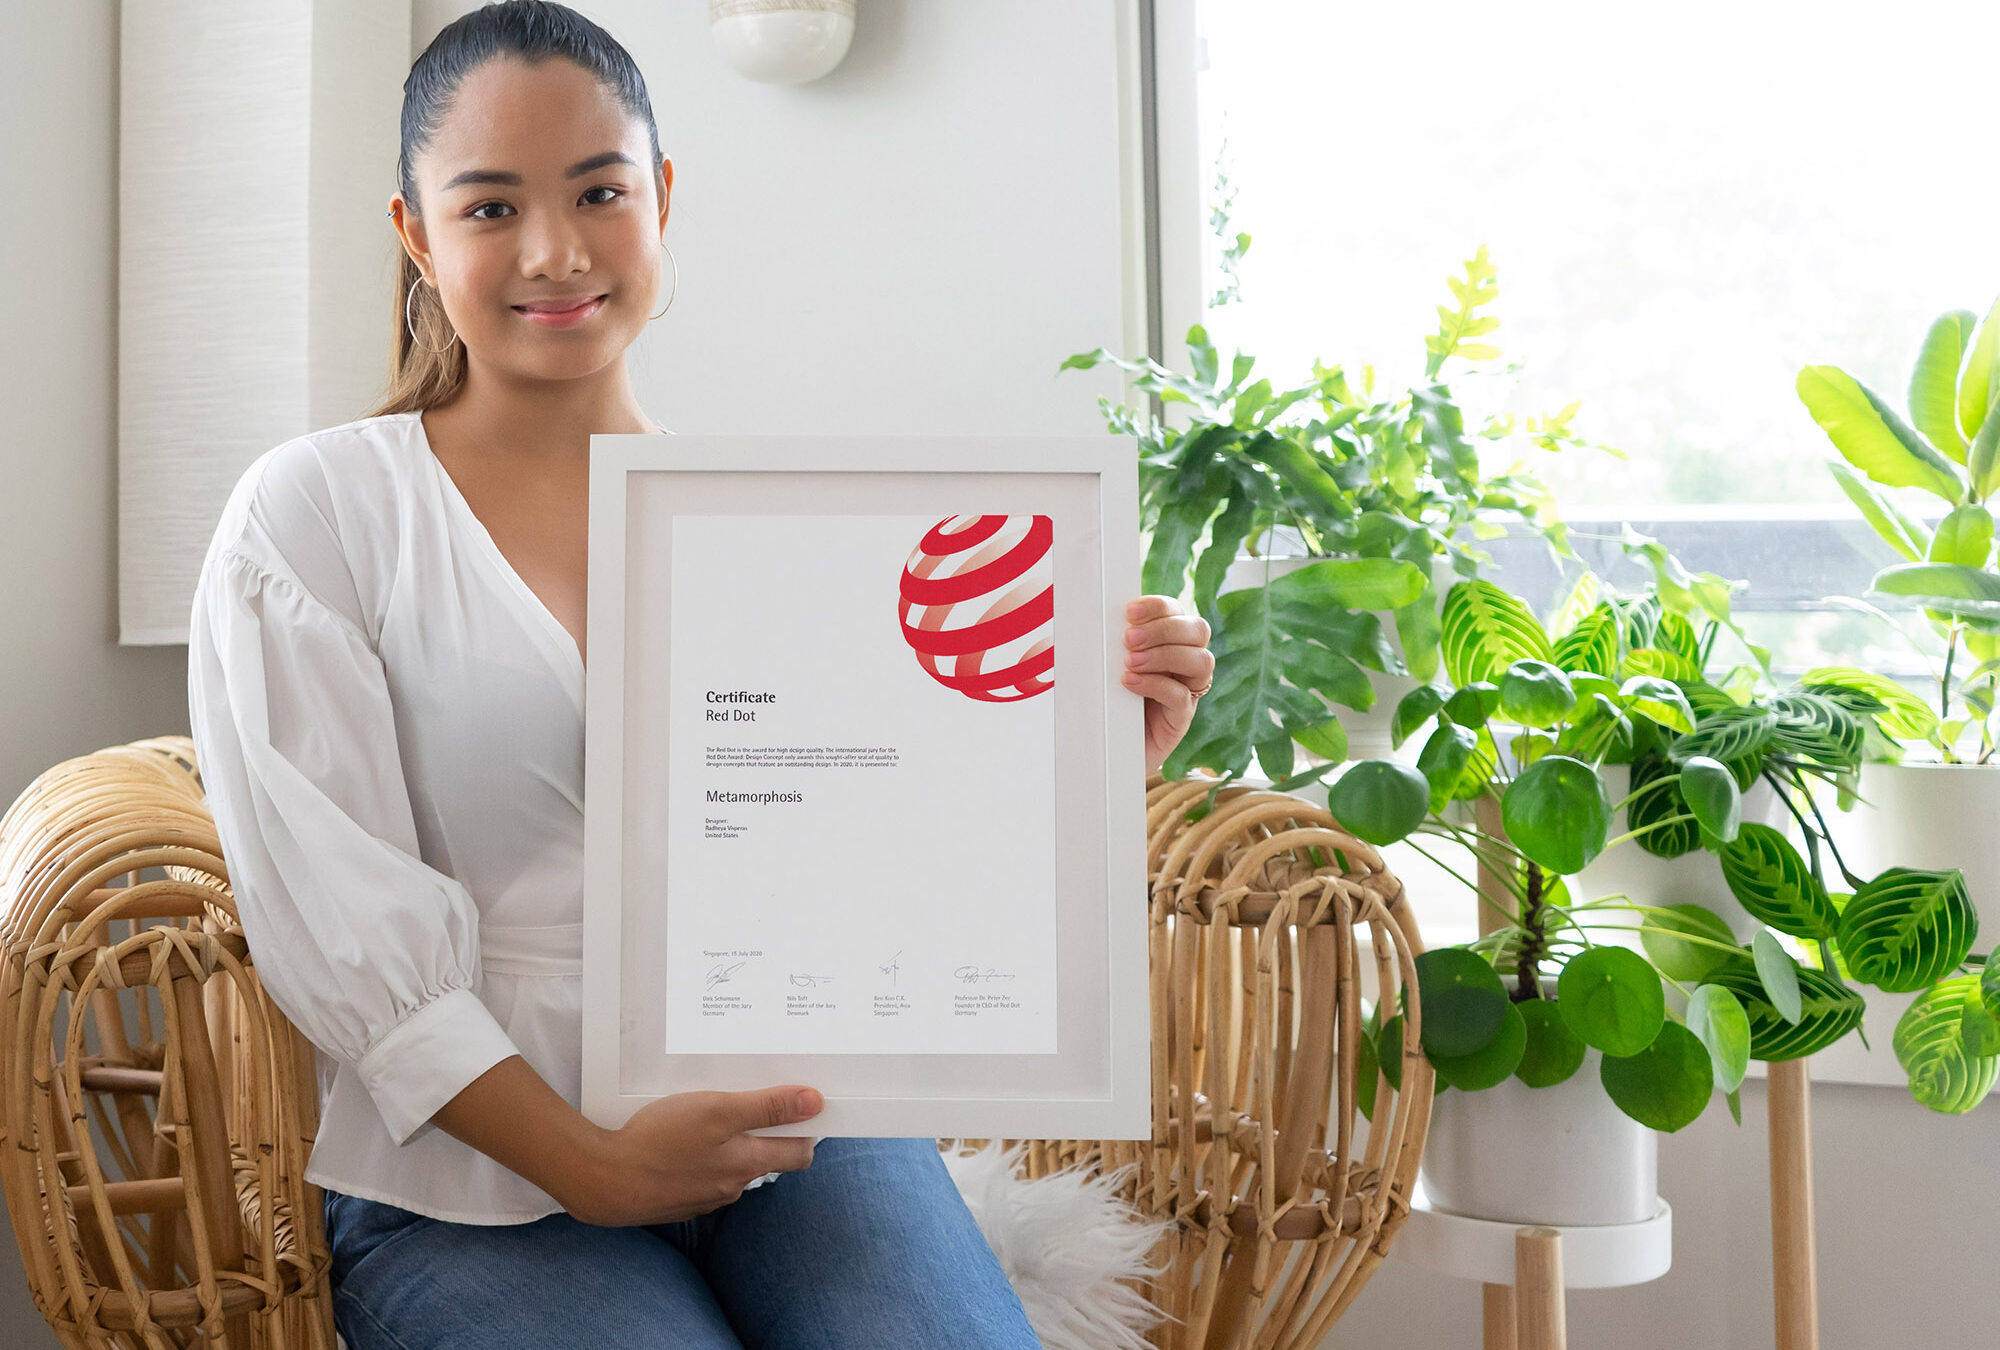 Radheya Visperas Ponce With Her Red Dot Award Certificated 2